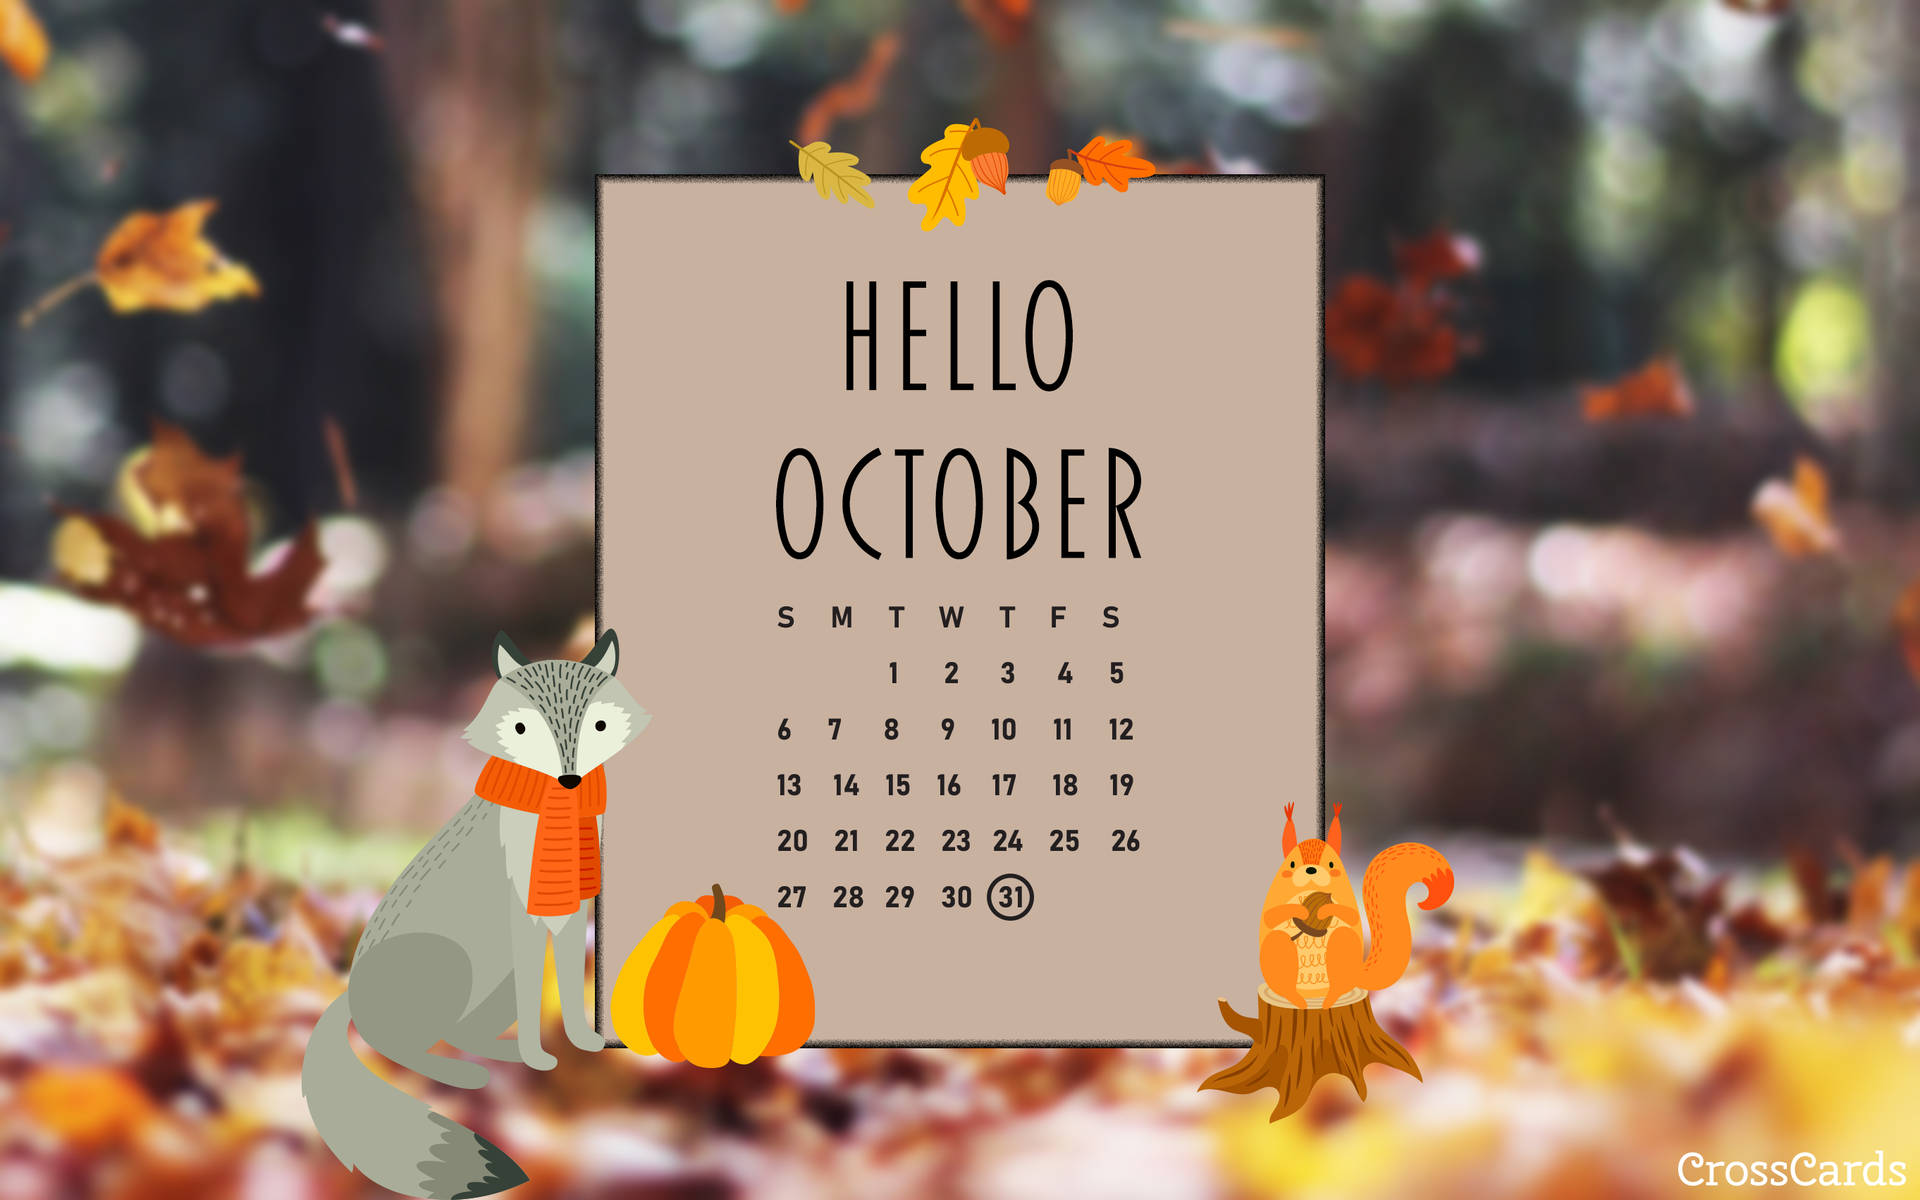 Hello October 2020 Calendar Wallpaper